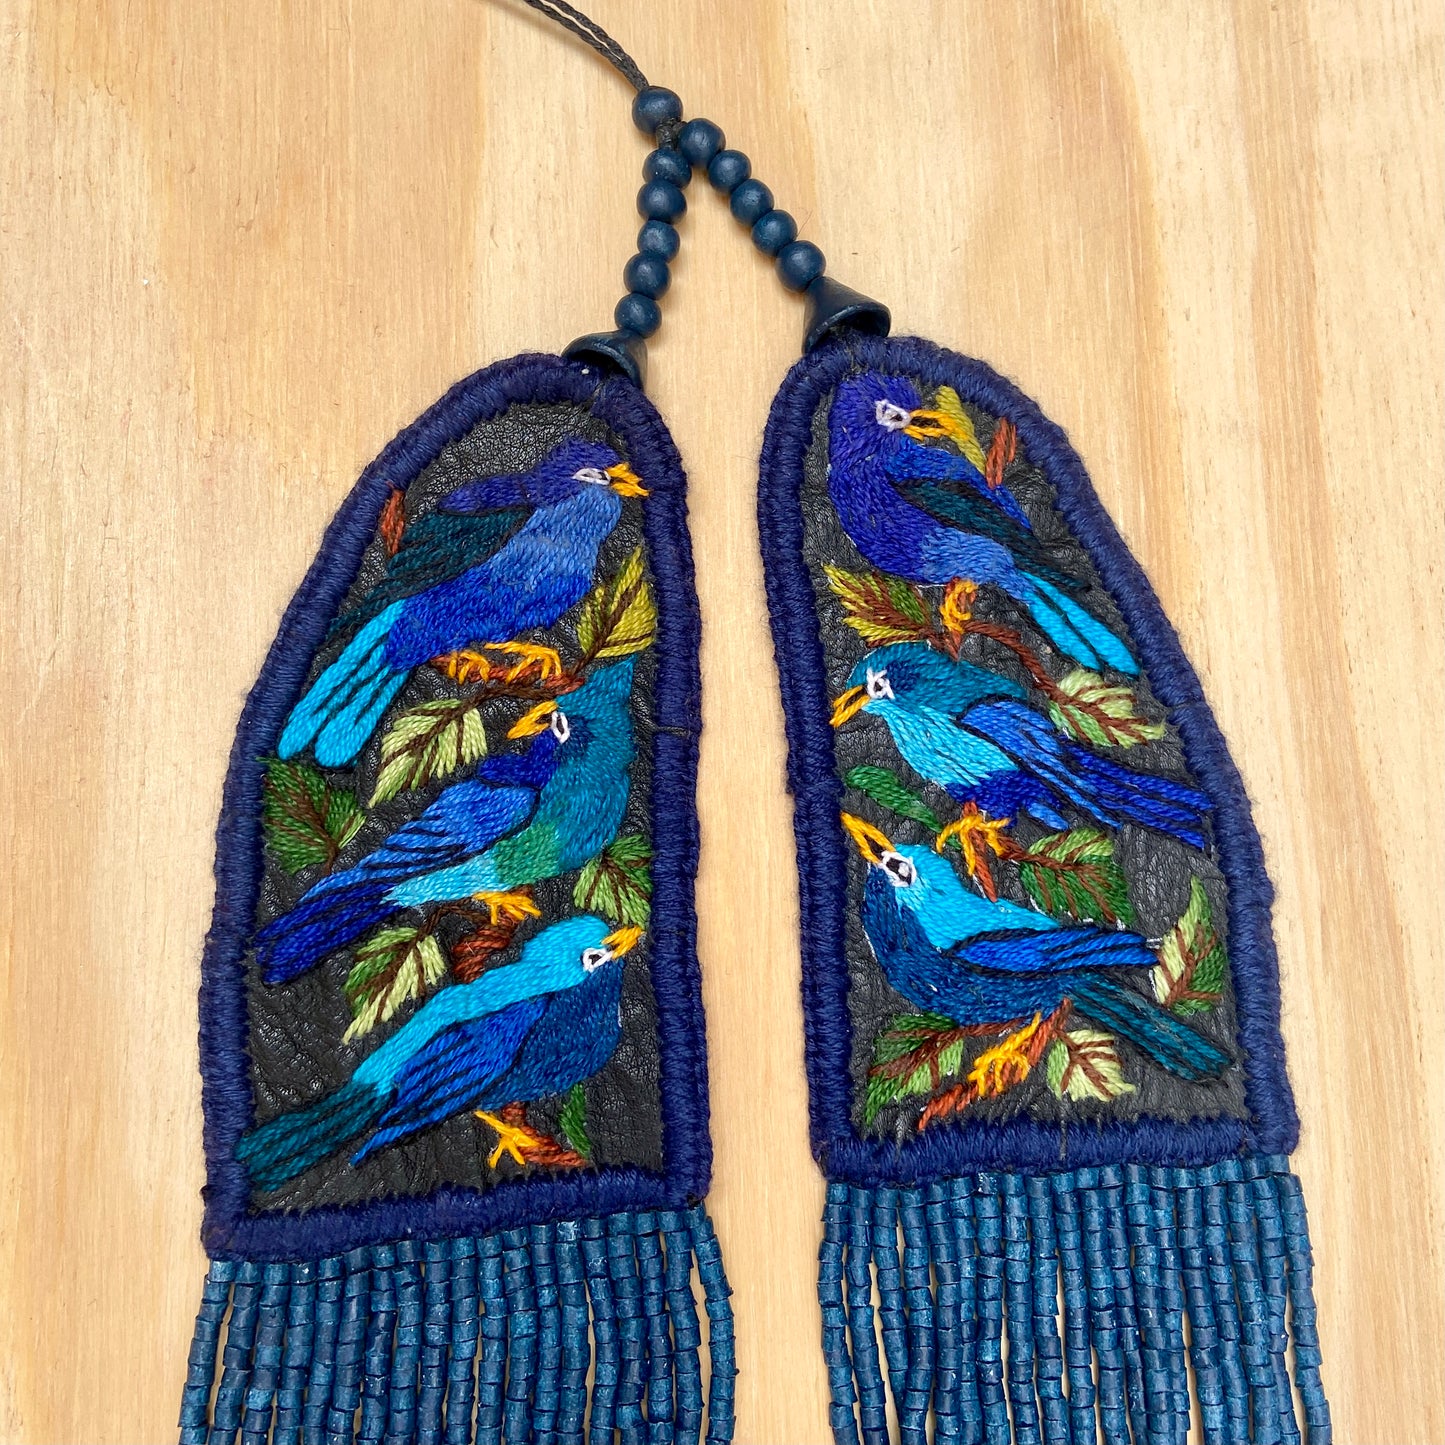 Embroidered Birds Chest Pieces with precious stones - "Santiago Birds"